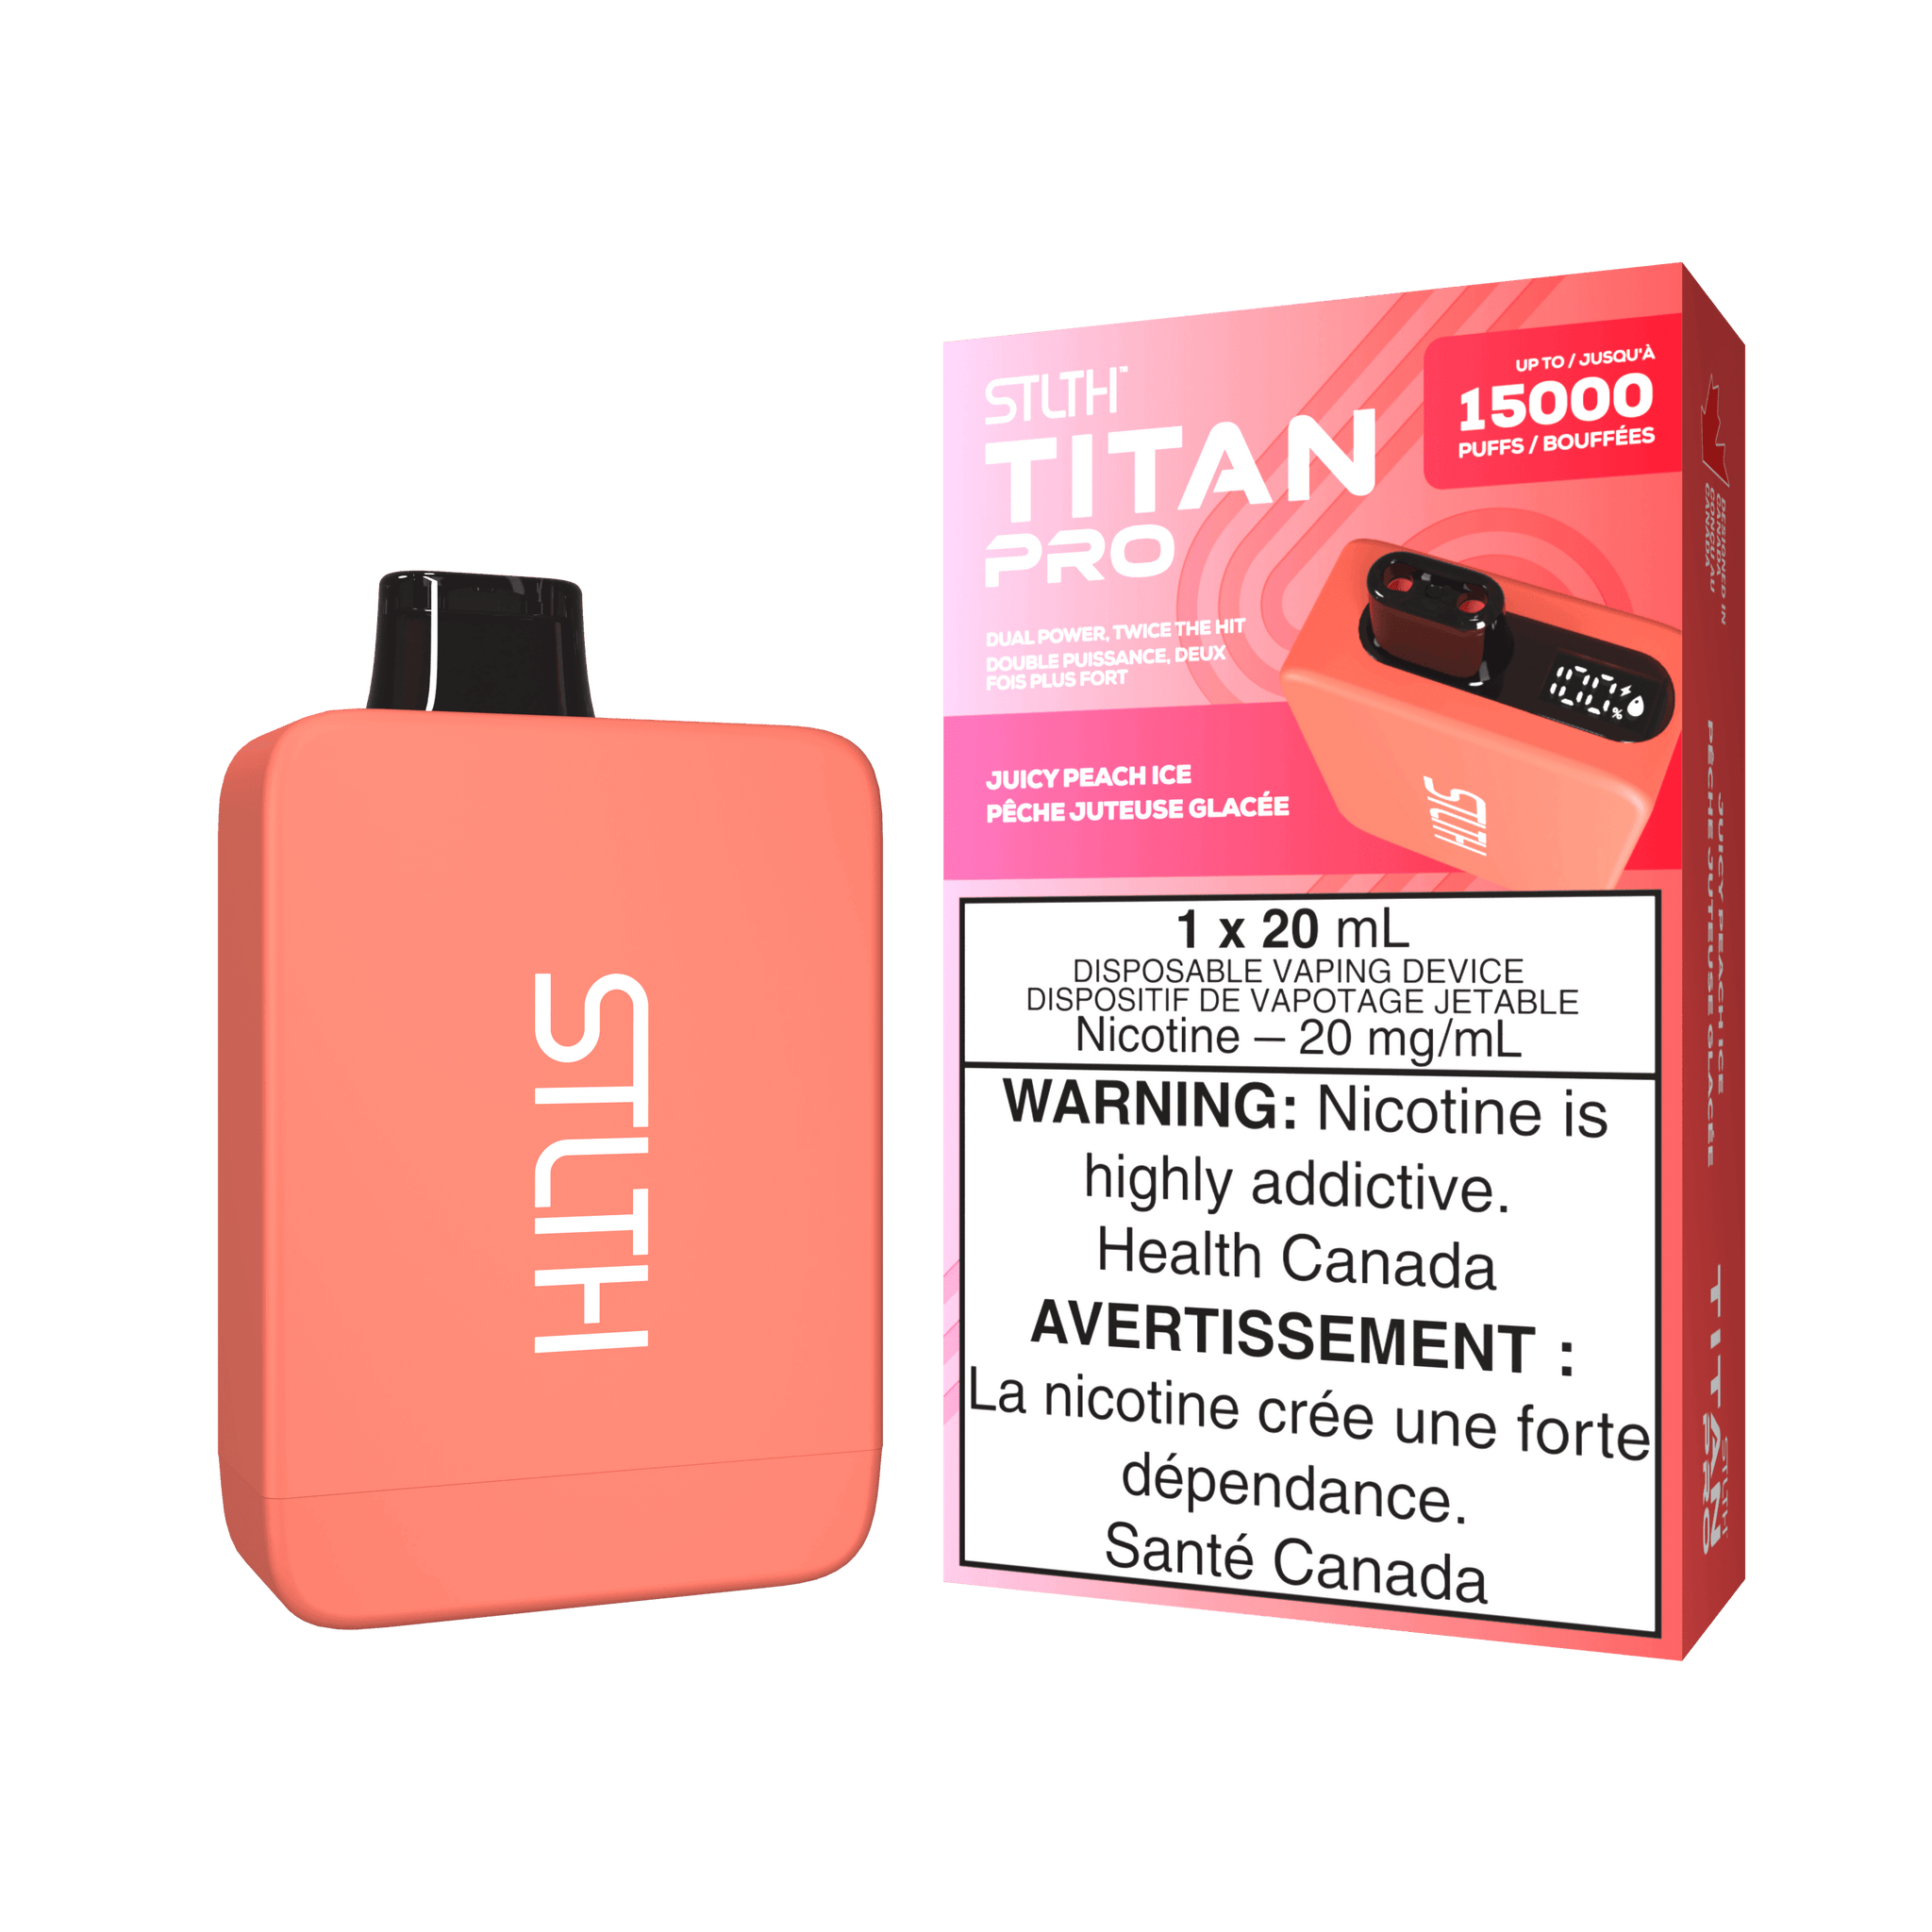 STLTH Titan Pro - Juicy Peach Ice - Vapor Shoppe